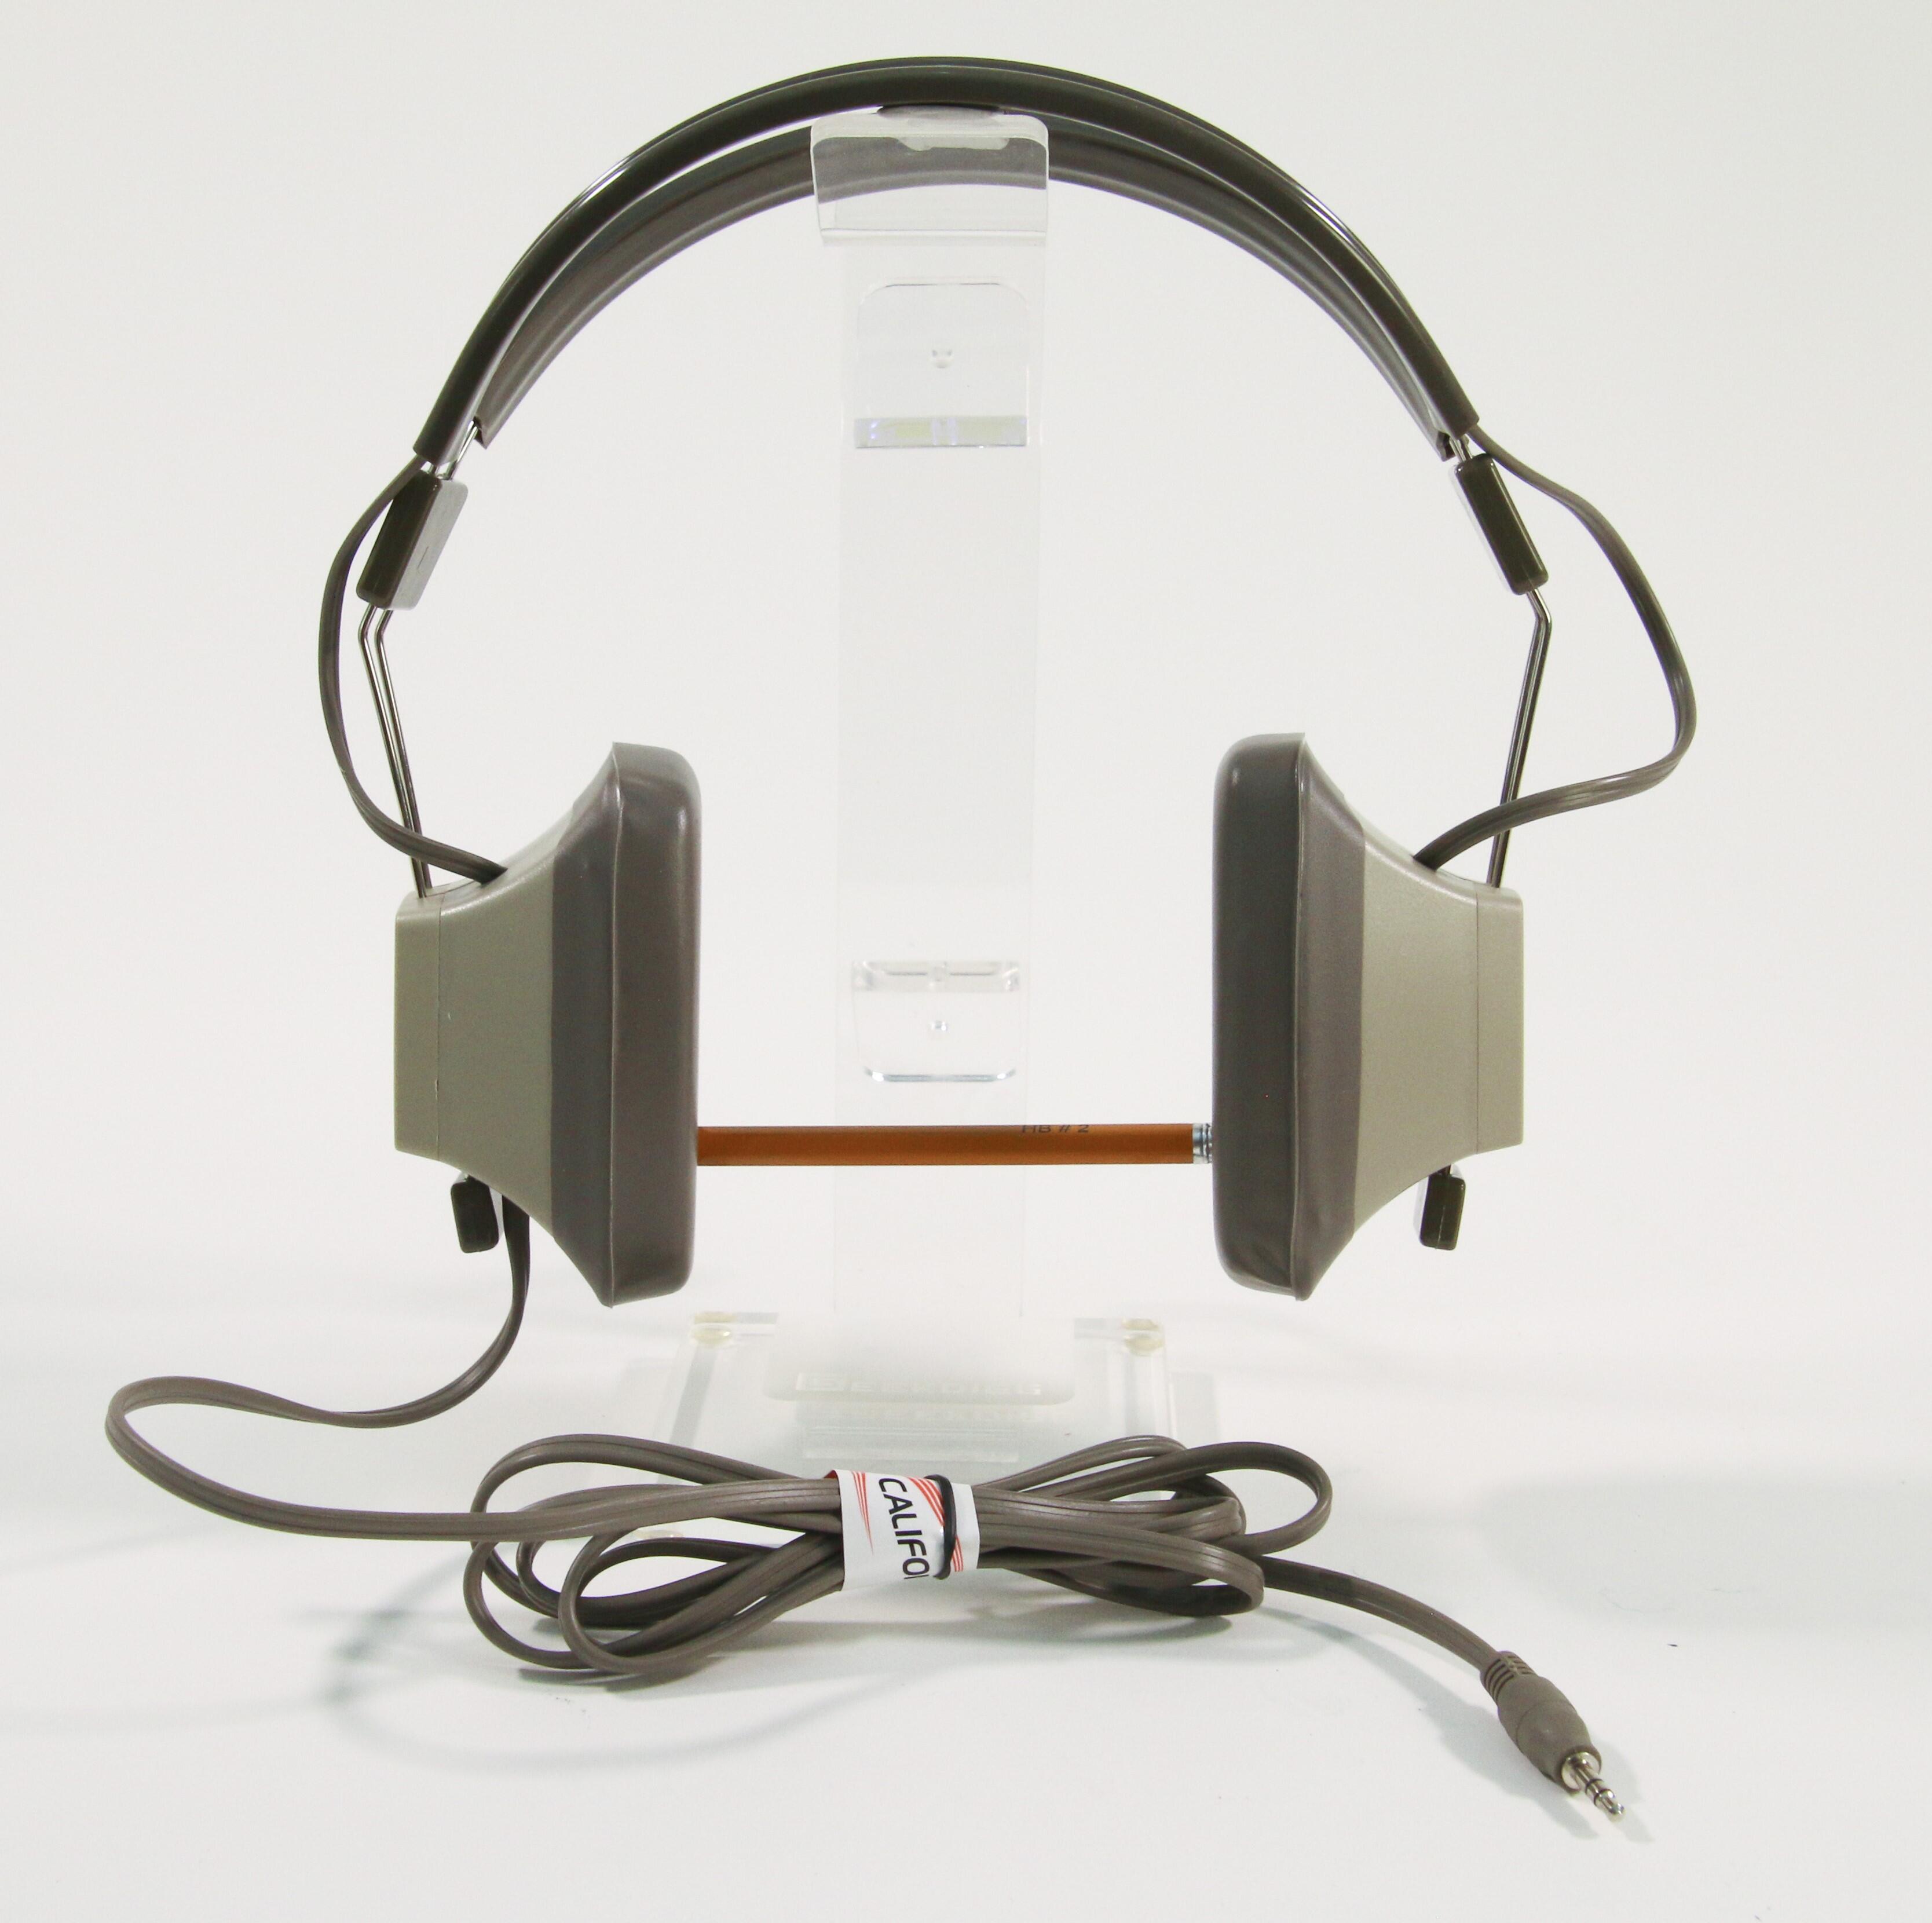 Califone EH-3SV Explorer Binaural Headphones, Light Grey/Beige - image 2 of 2